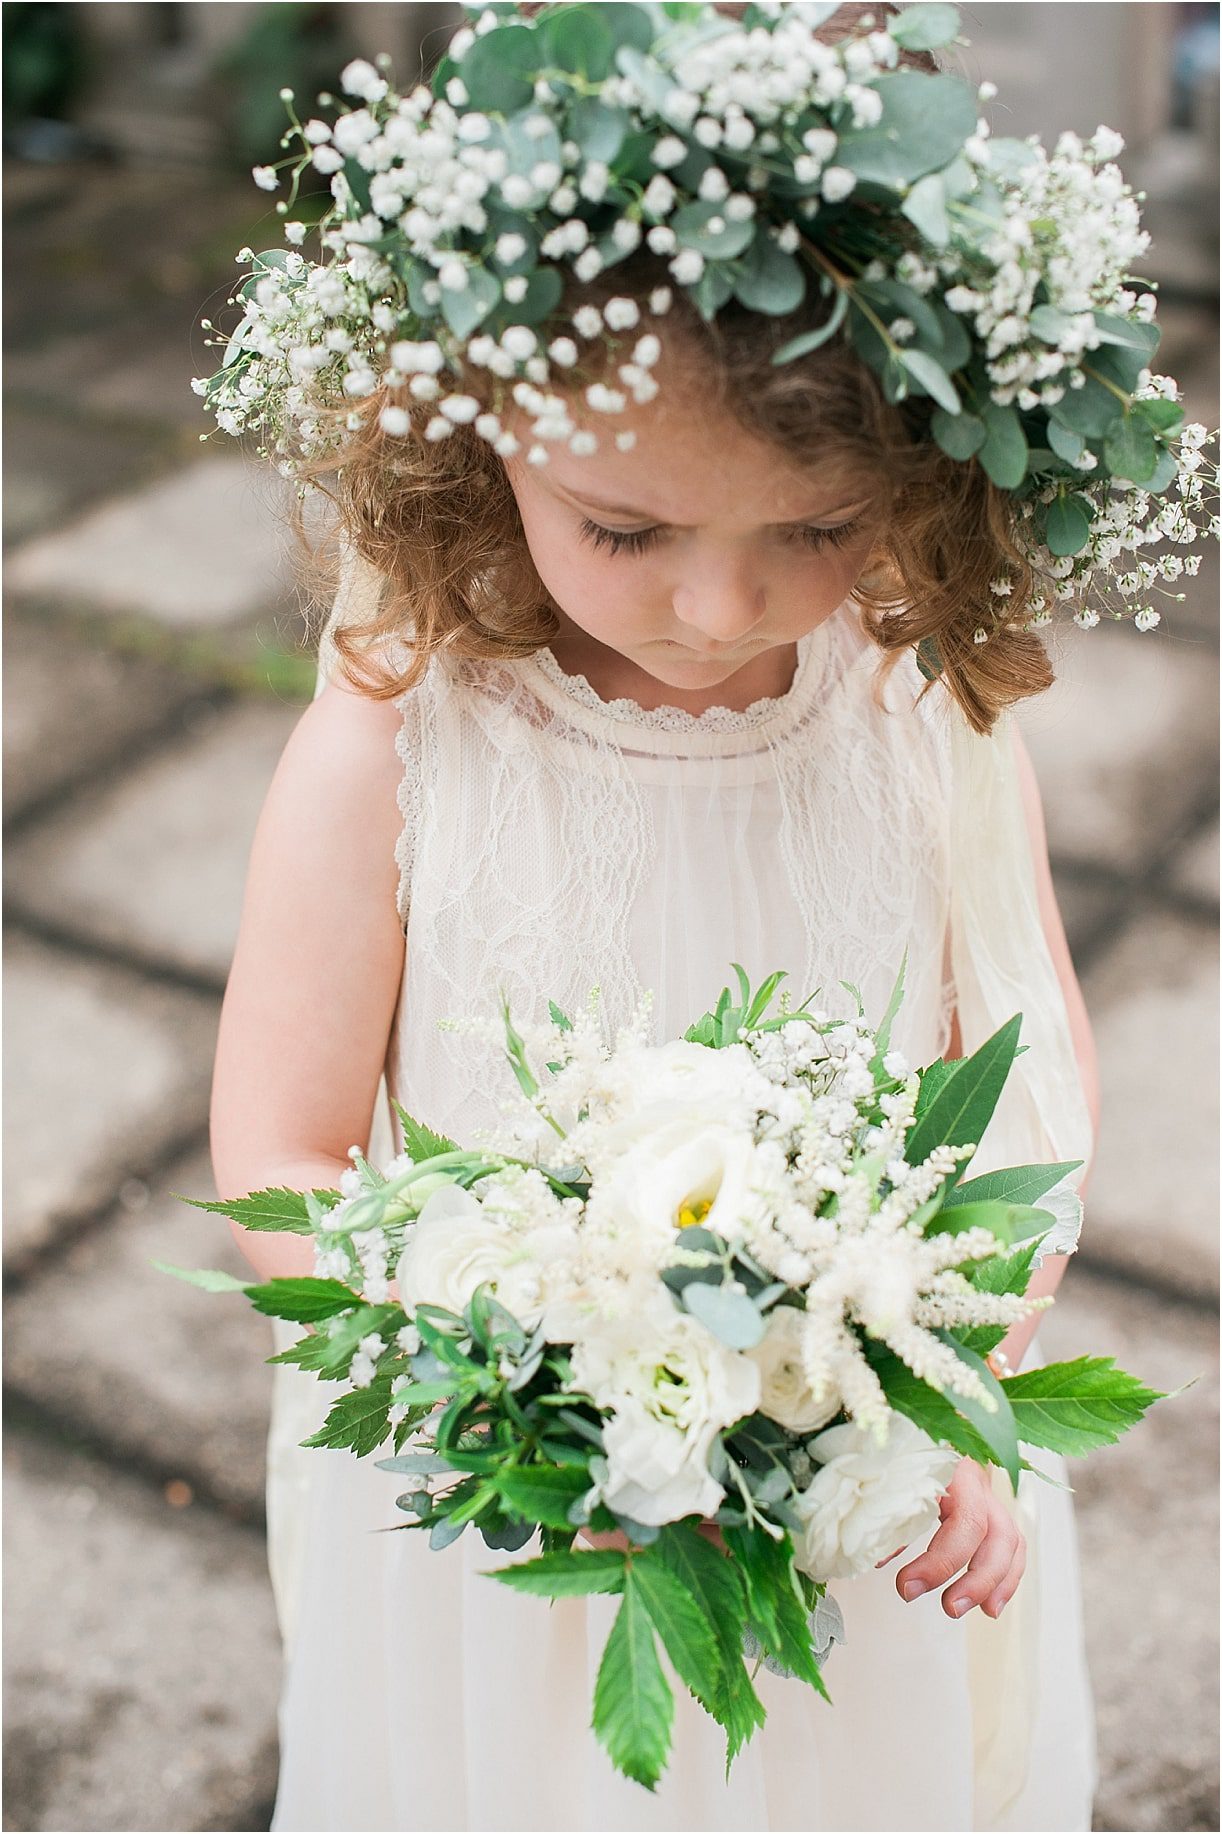 Virginia Barn Wedding as seen on Hill City Bride Wedding Blog - flower girl, flower crown, baby's breath